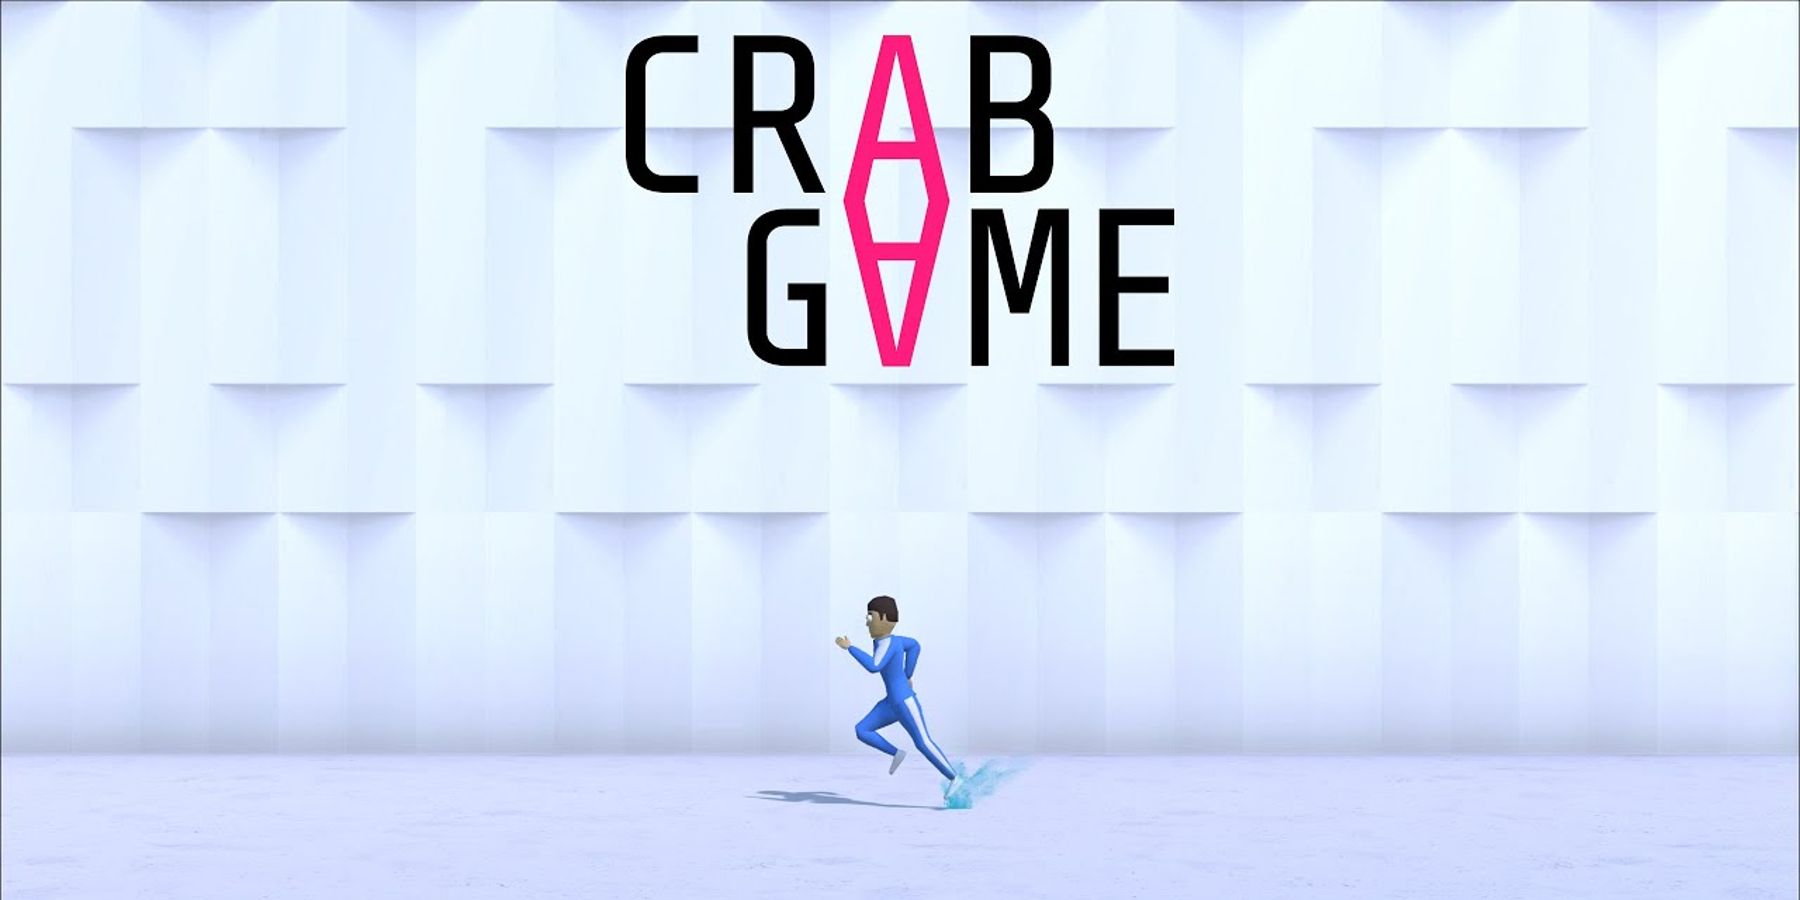 crab game